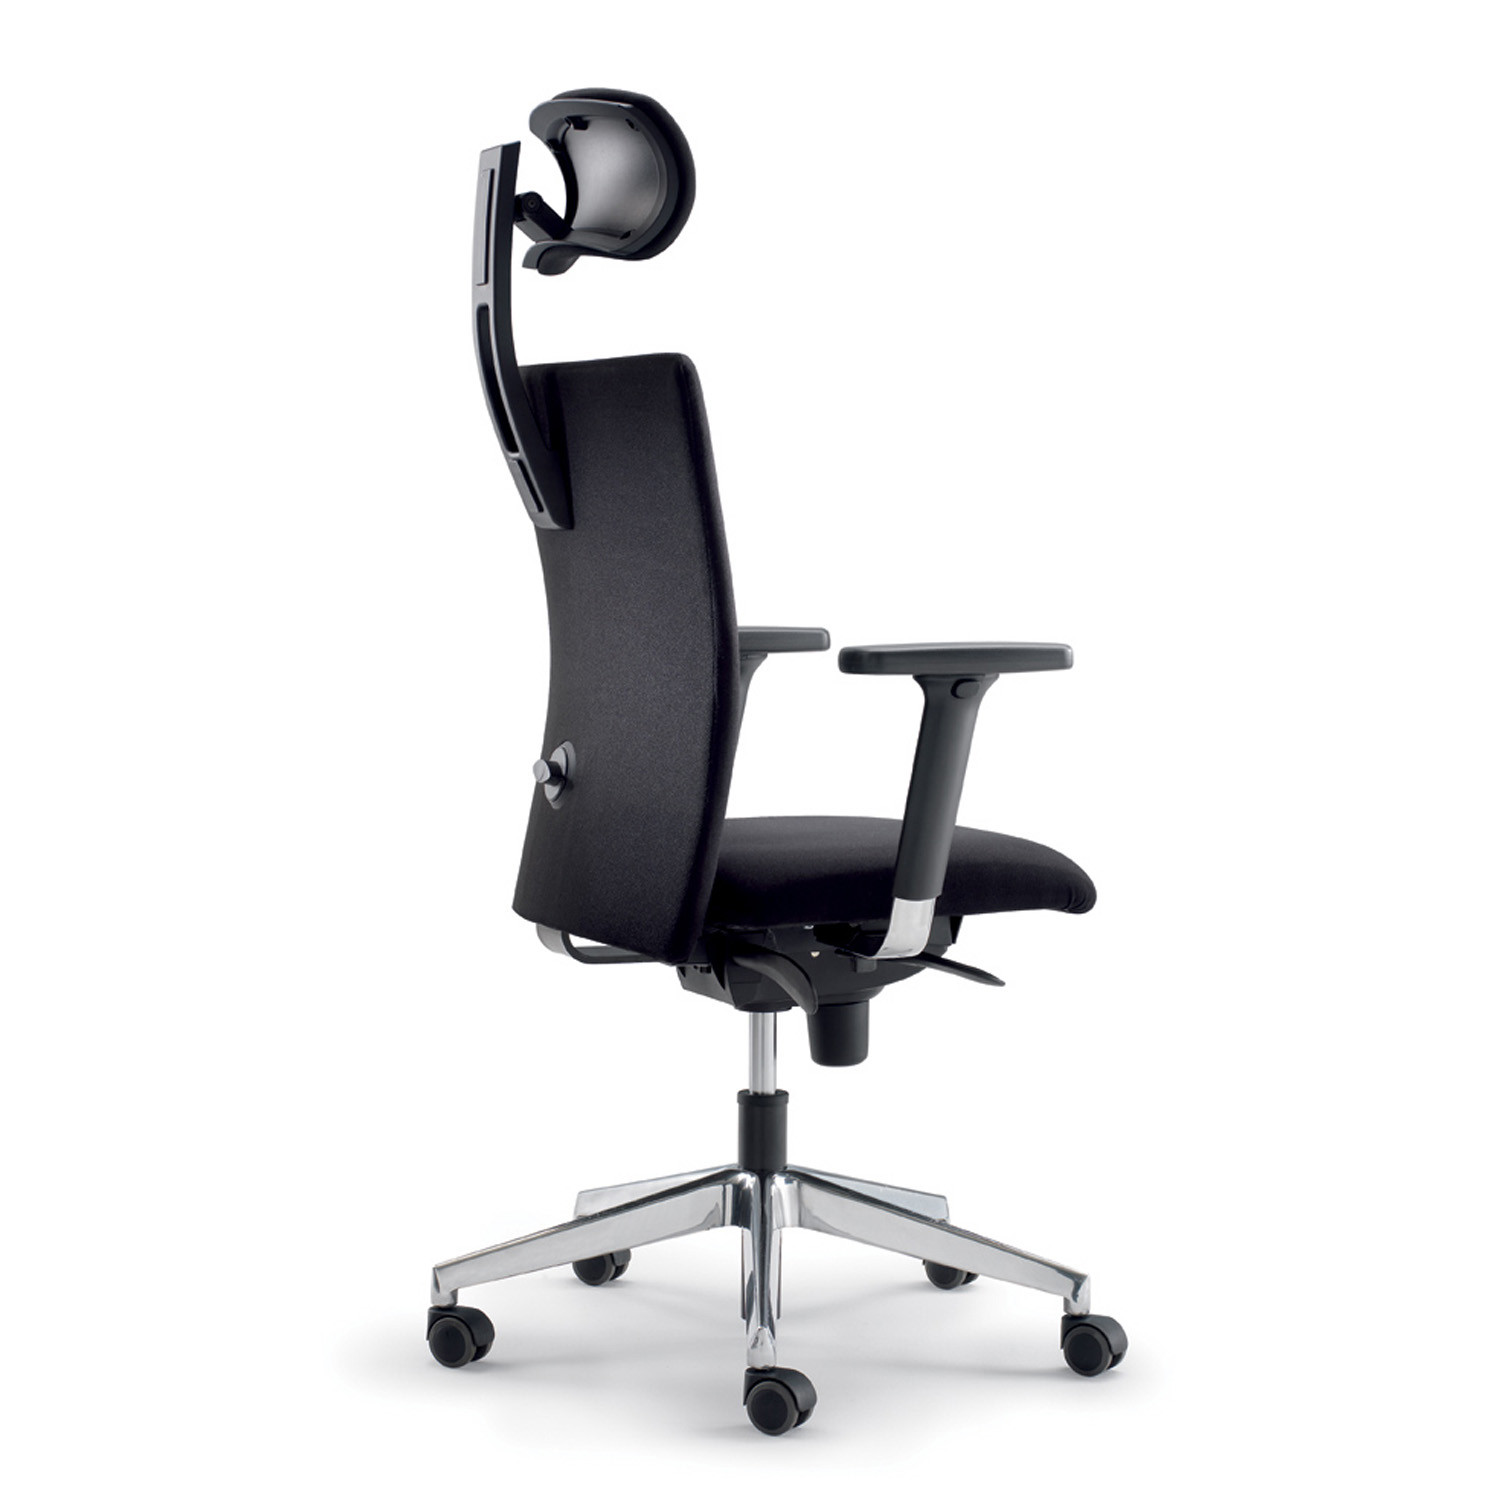 Paro Business Chair with Ergonomic Headrest